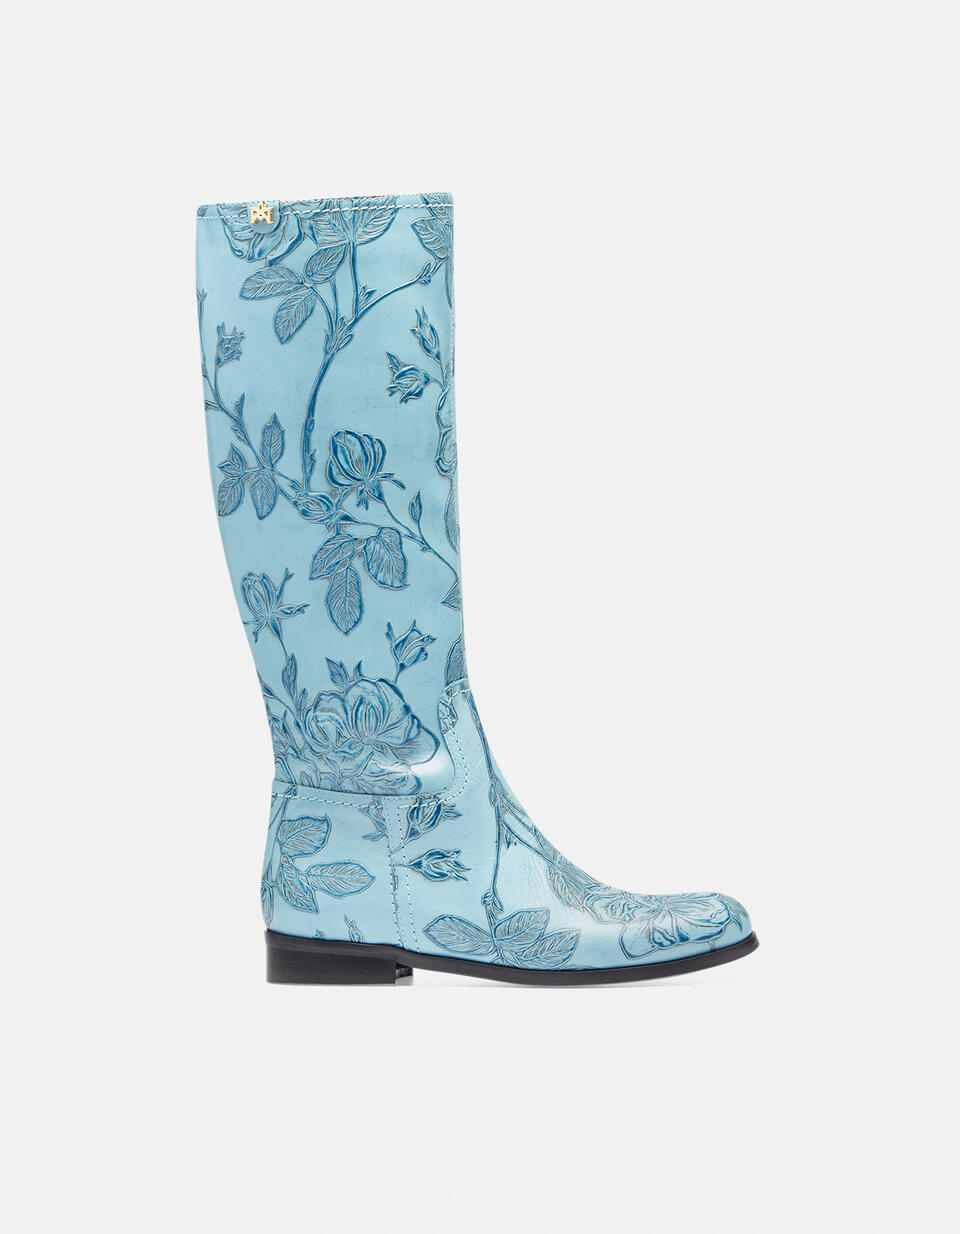 Mimì boot Light blue  - Woman Shoes - Shoes - Cuoieria Fiorentina